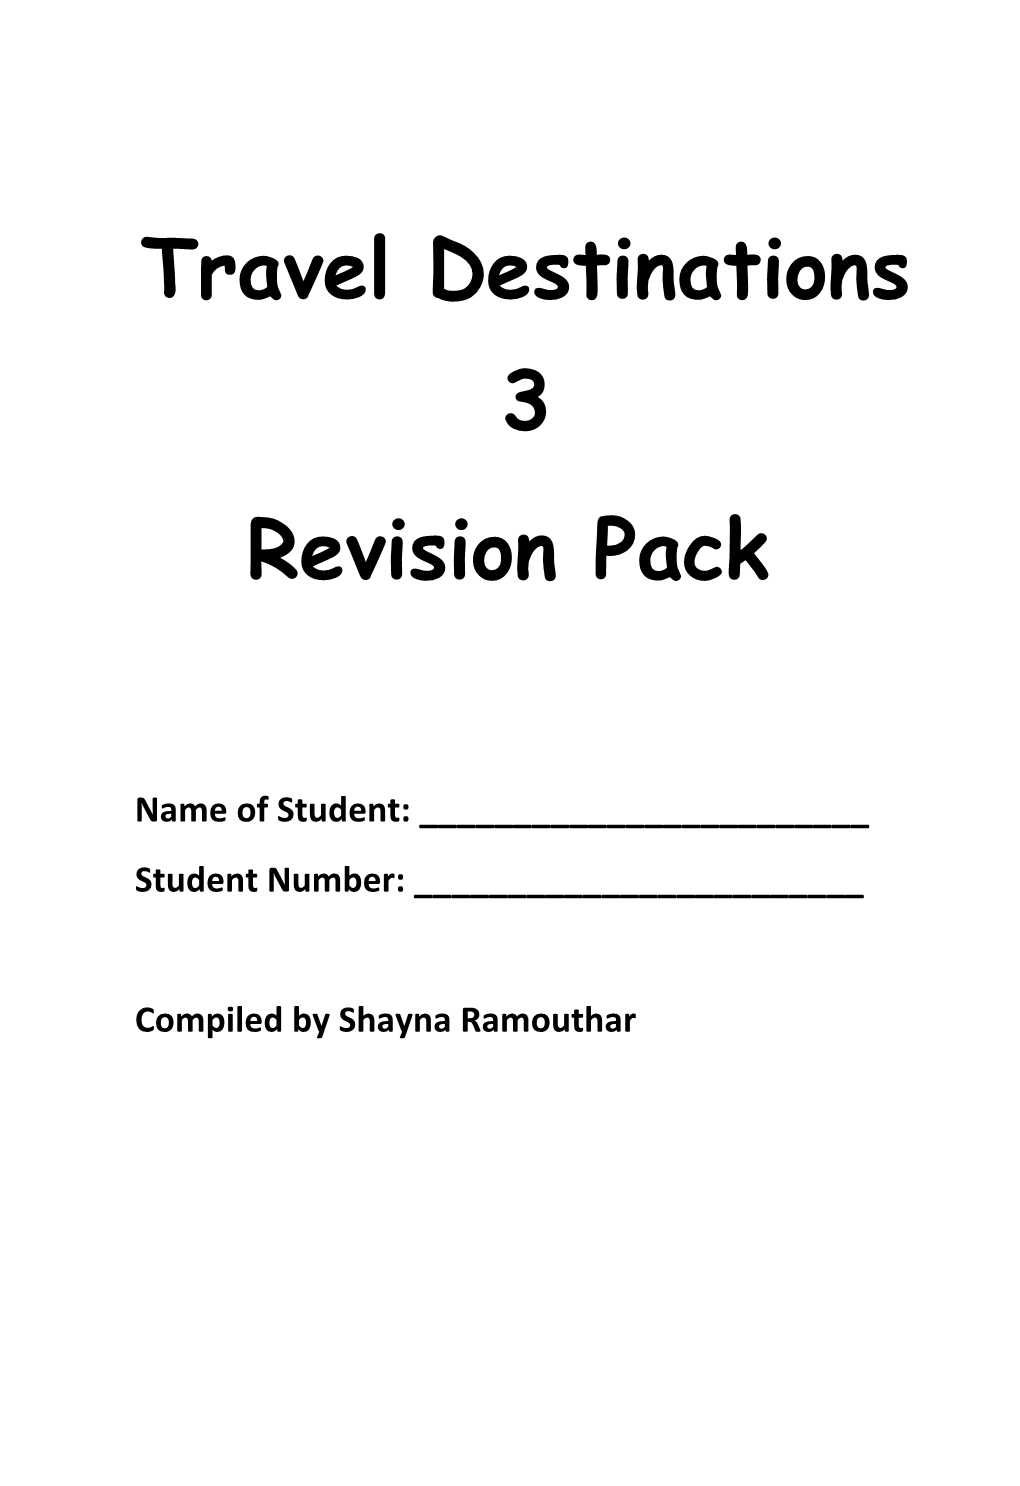 Travel Destinations 3